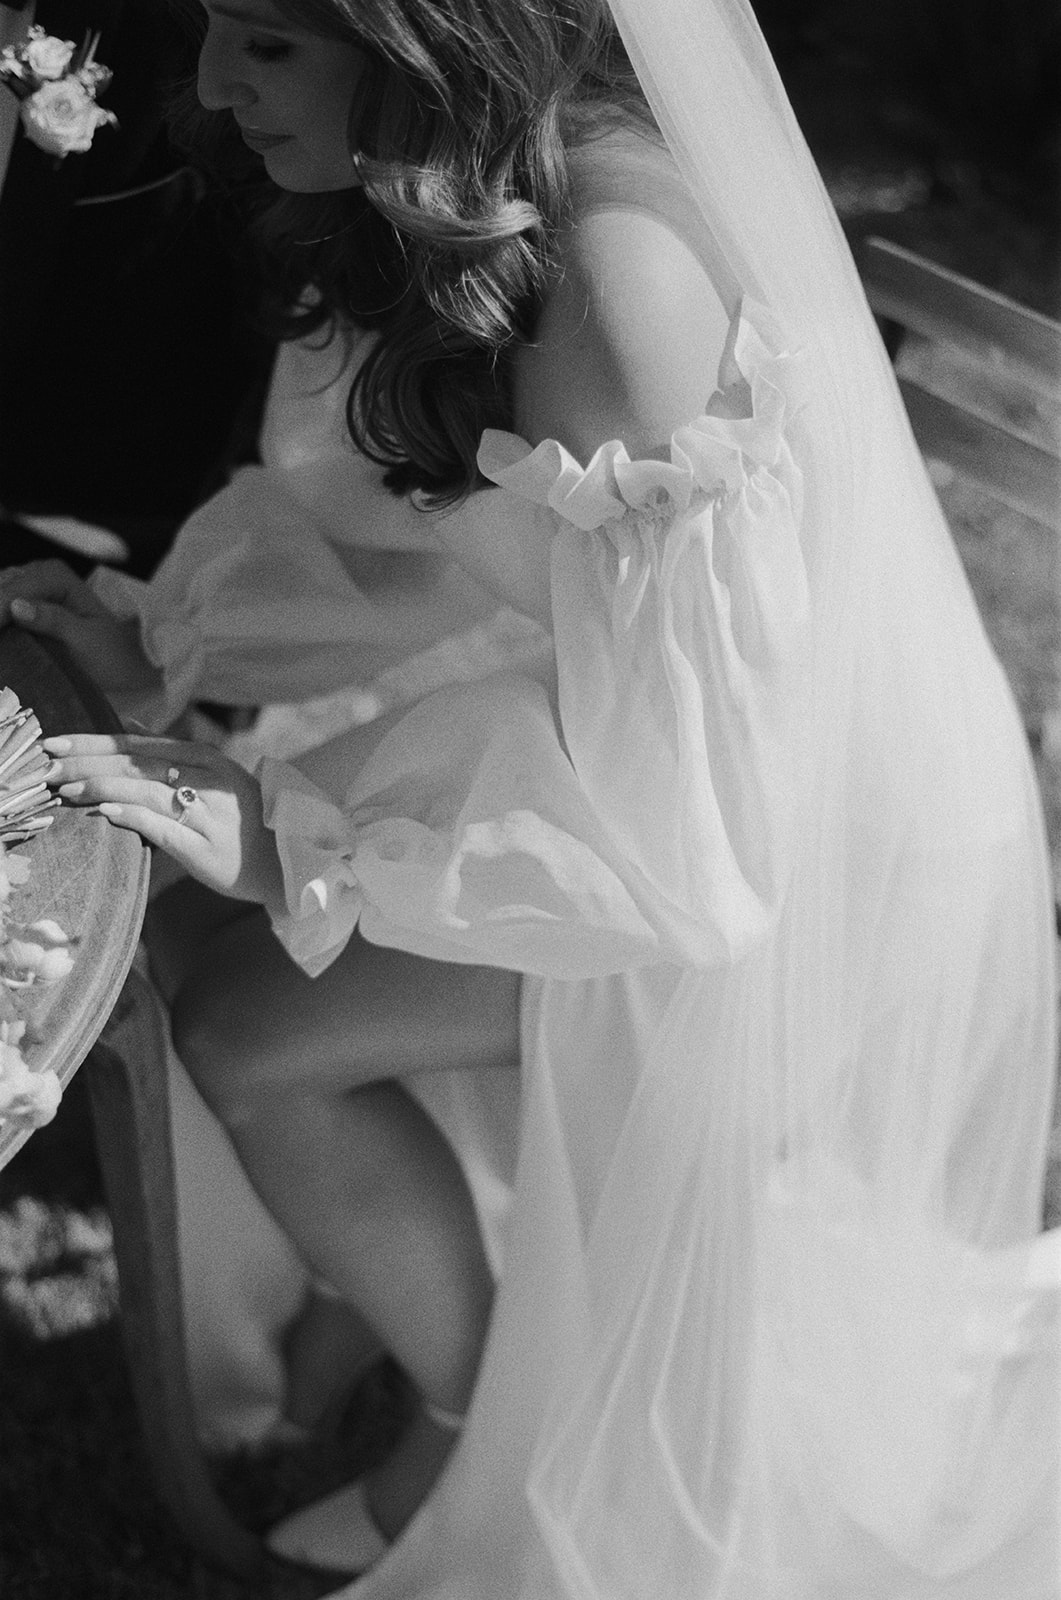 Redleaf wedding black and white 35mm films of bride during signing